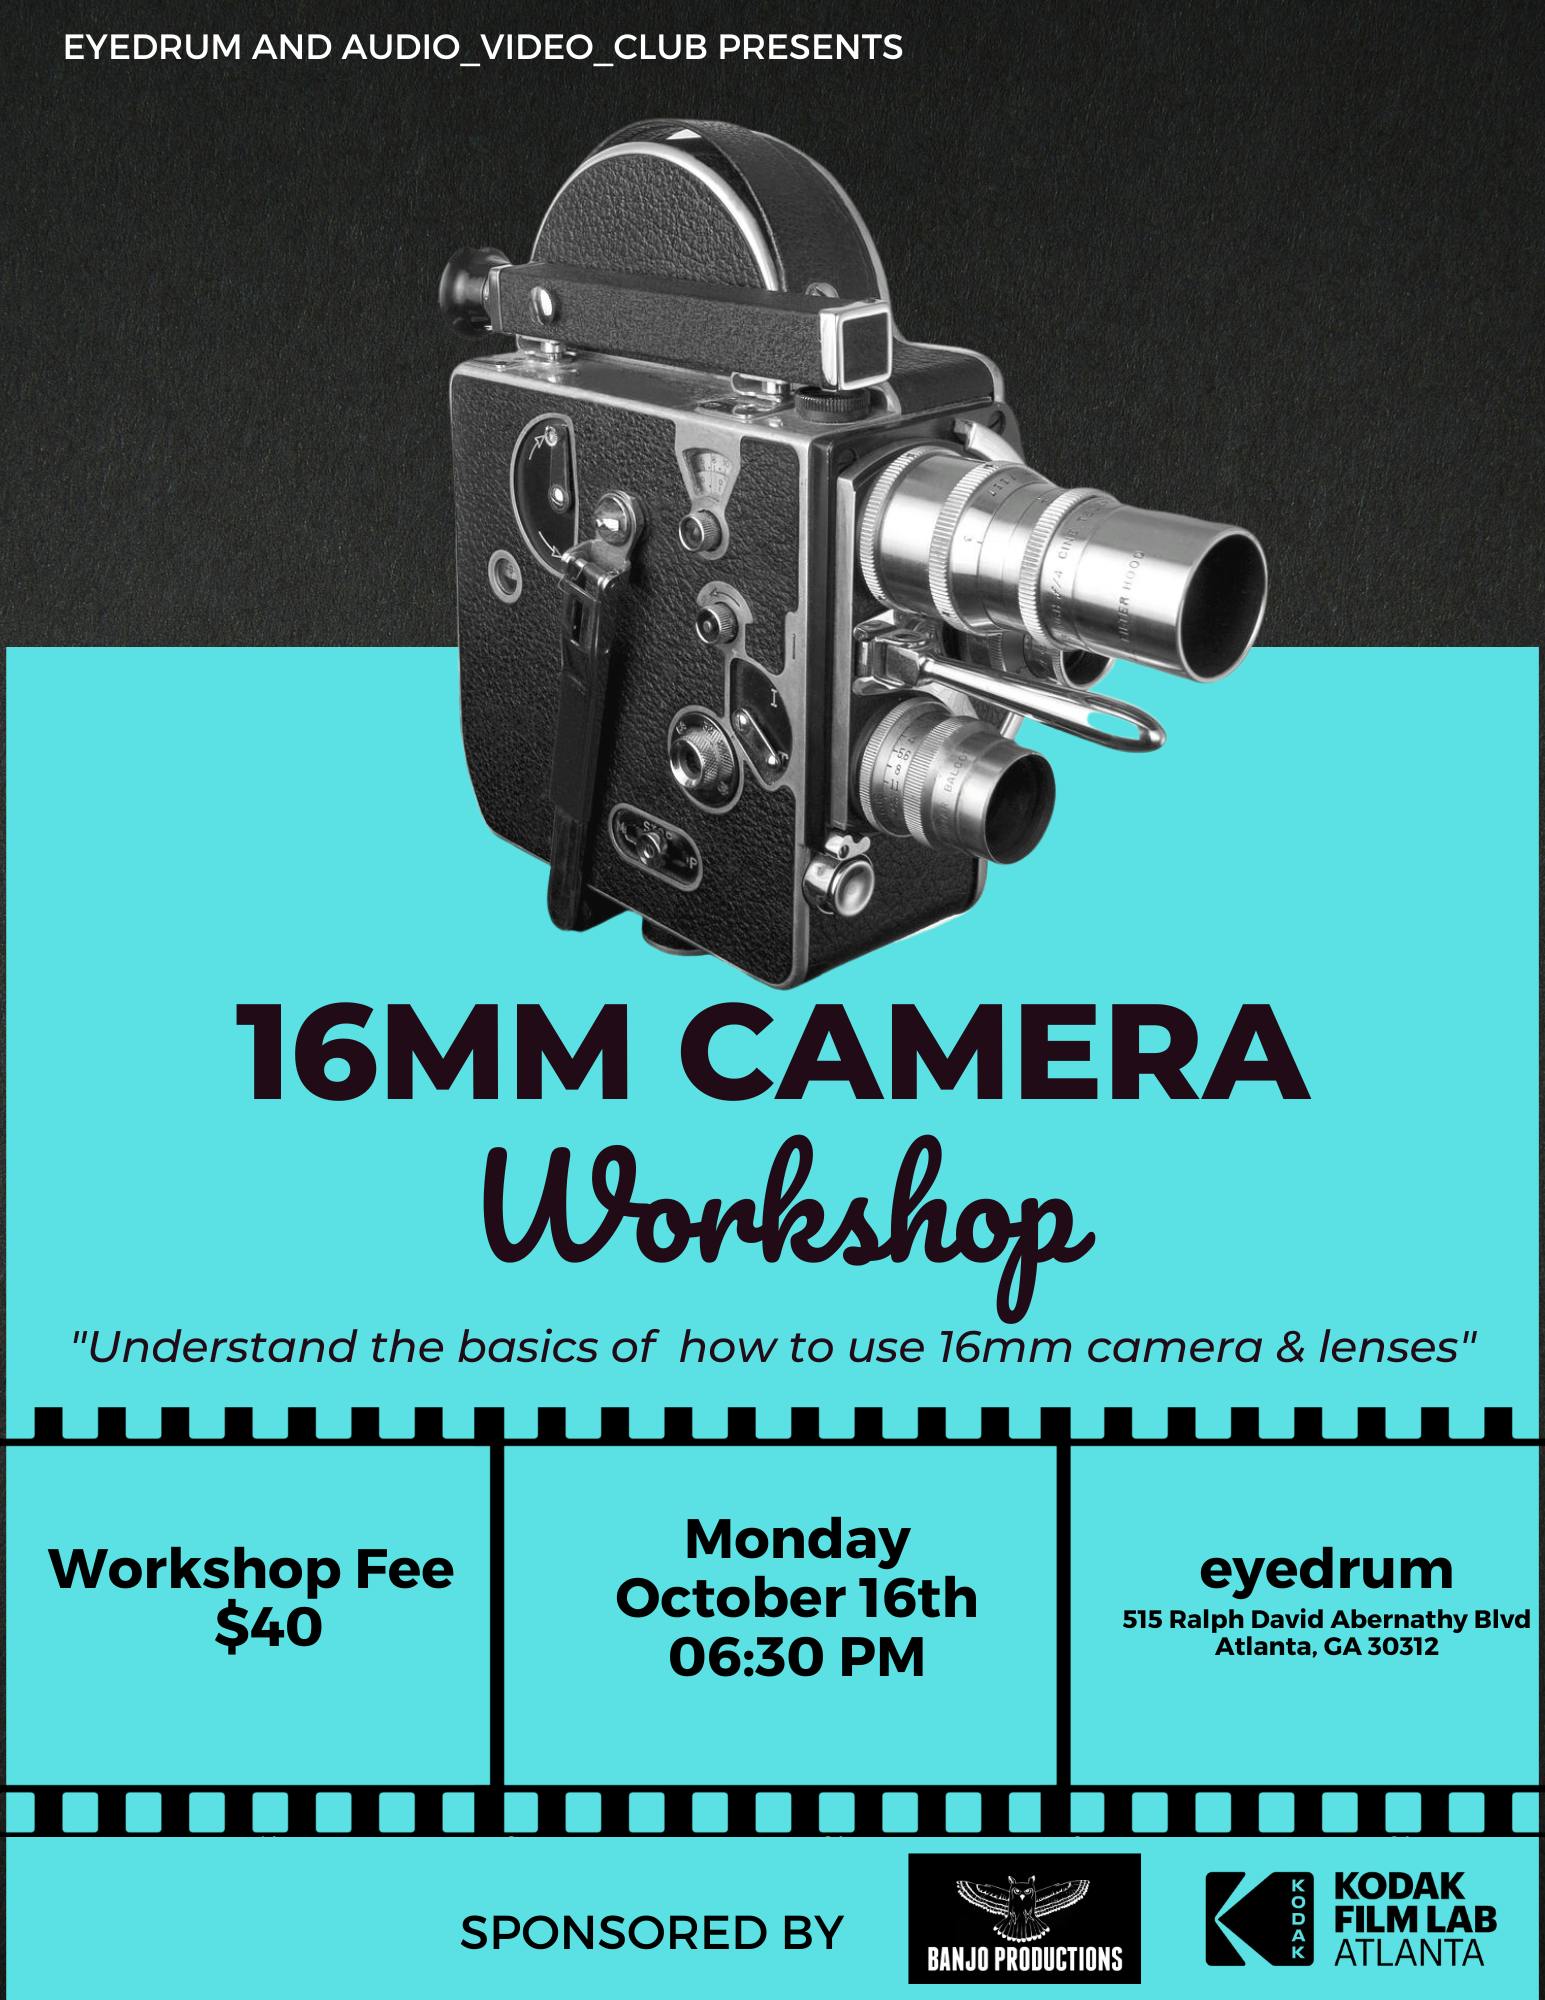 eyedrum and Audio Video Club present "16mm Camera Workshop"